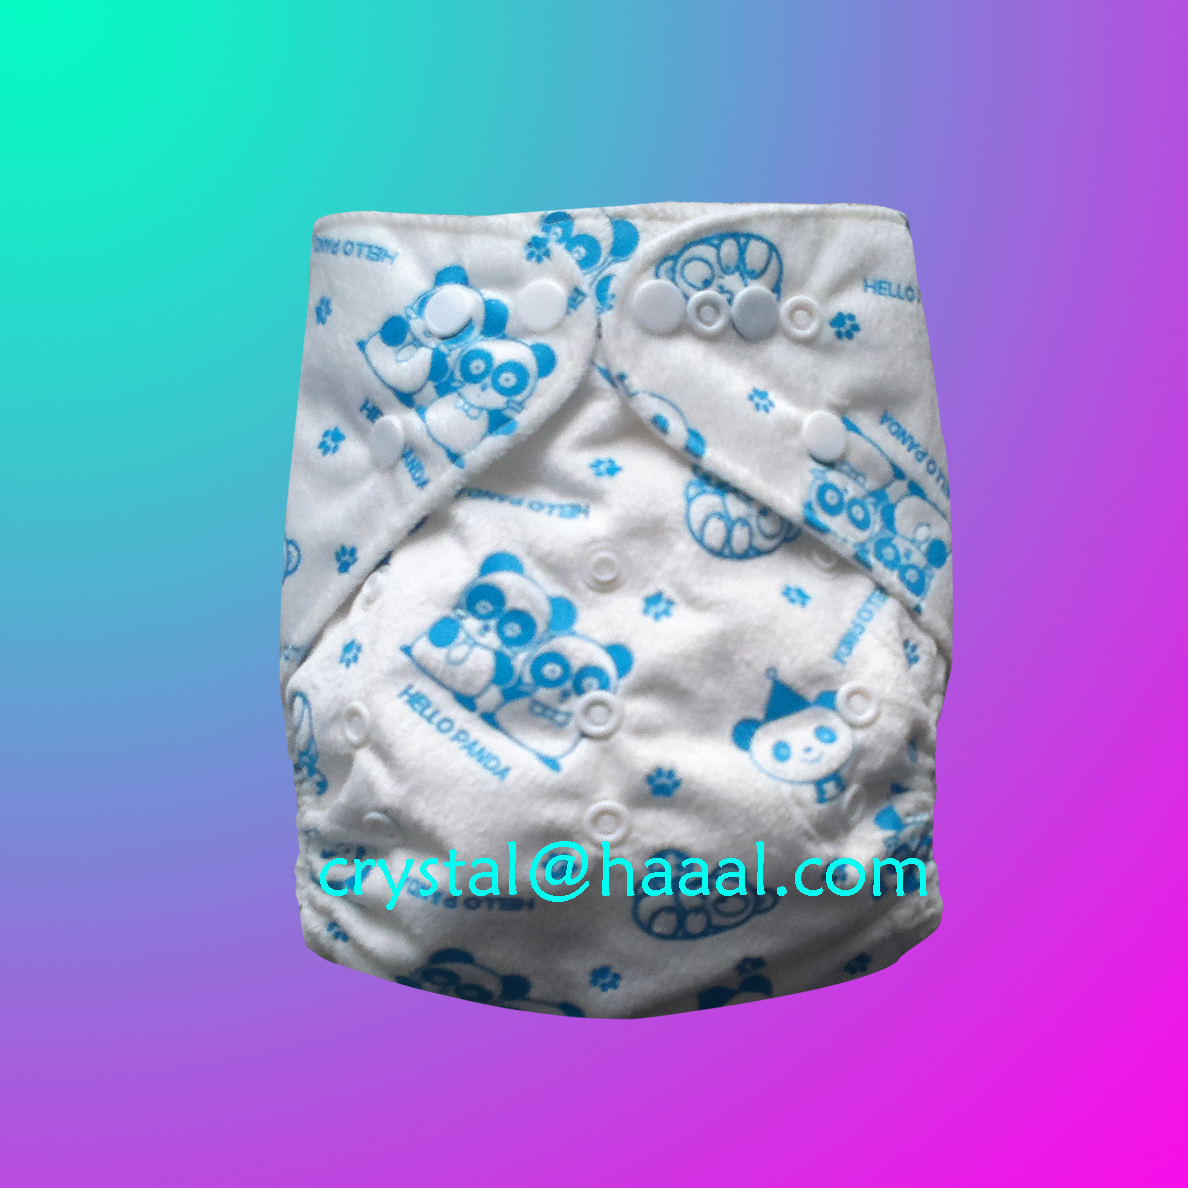 Minky reusable cloth diaper cover